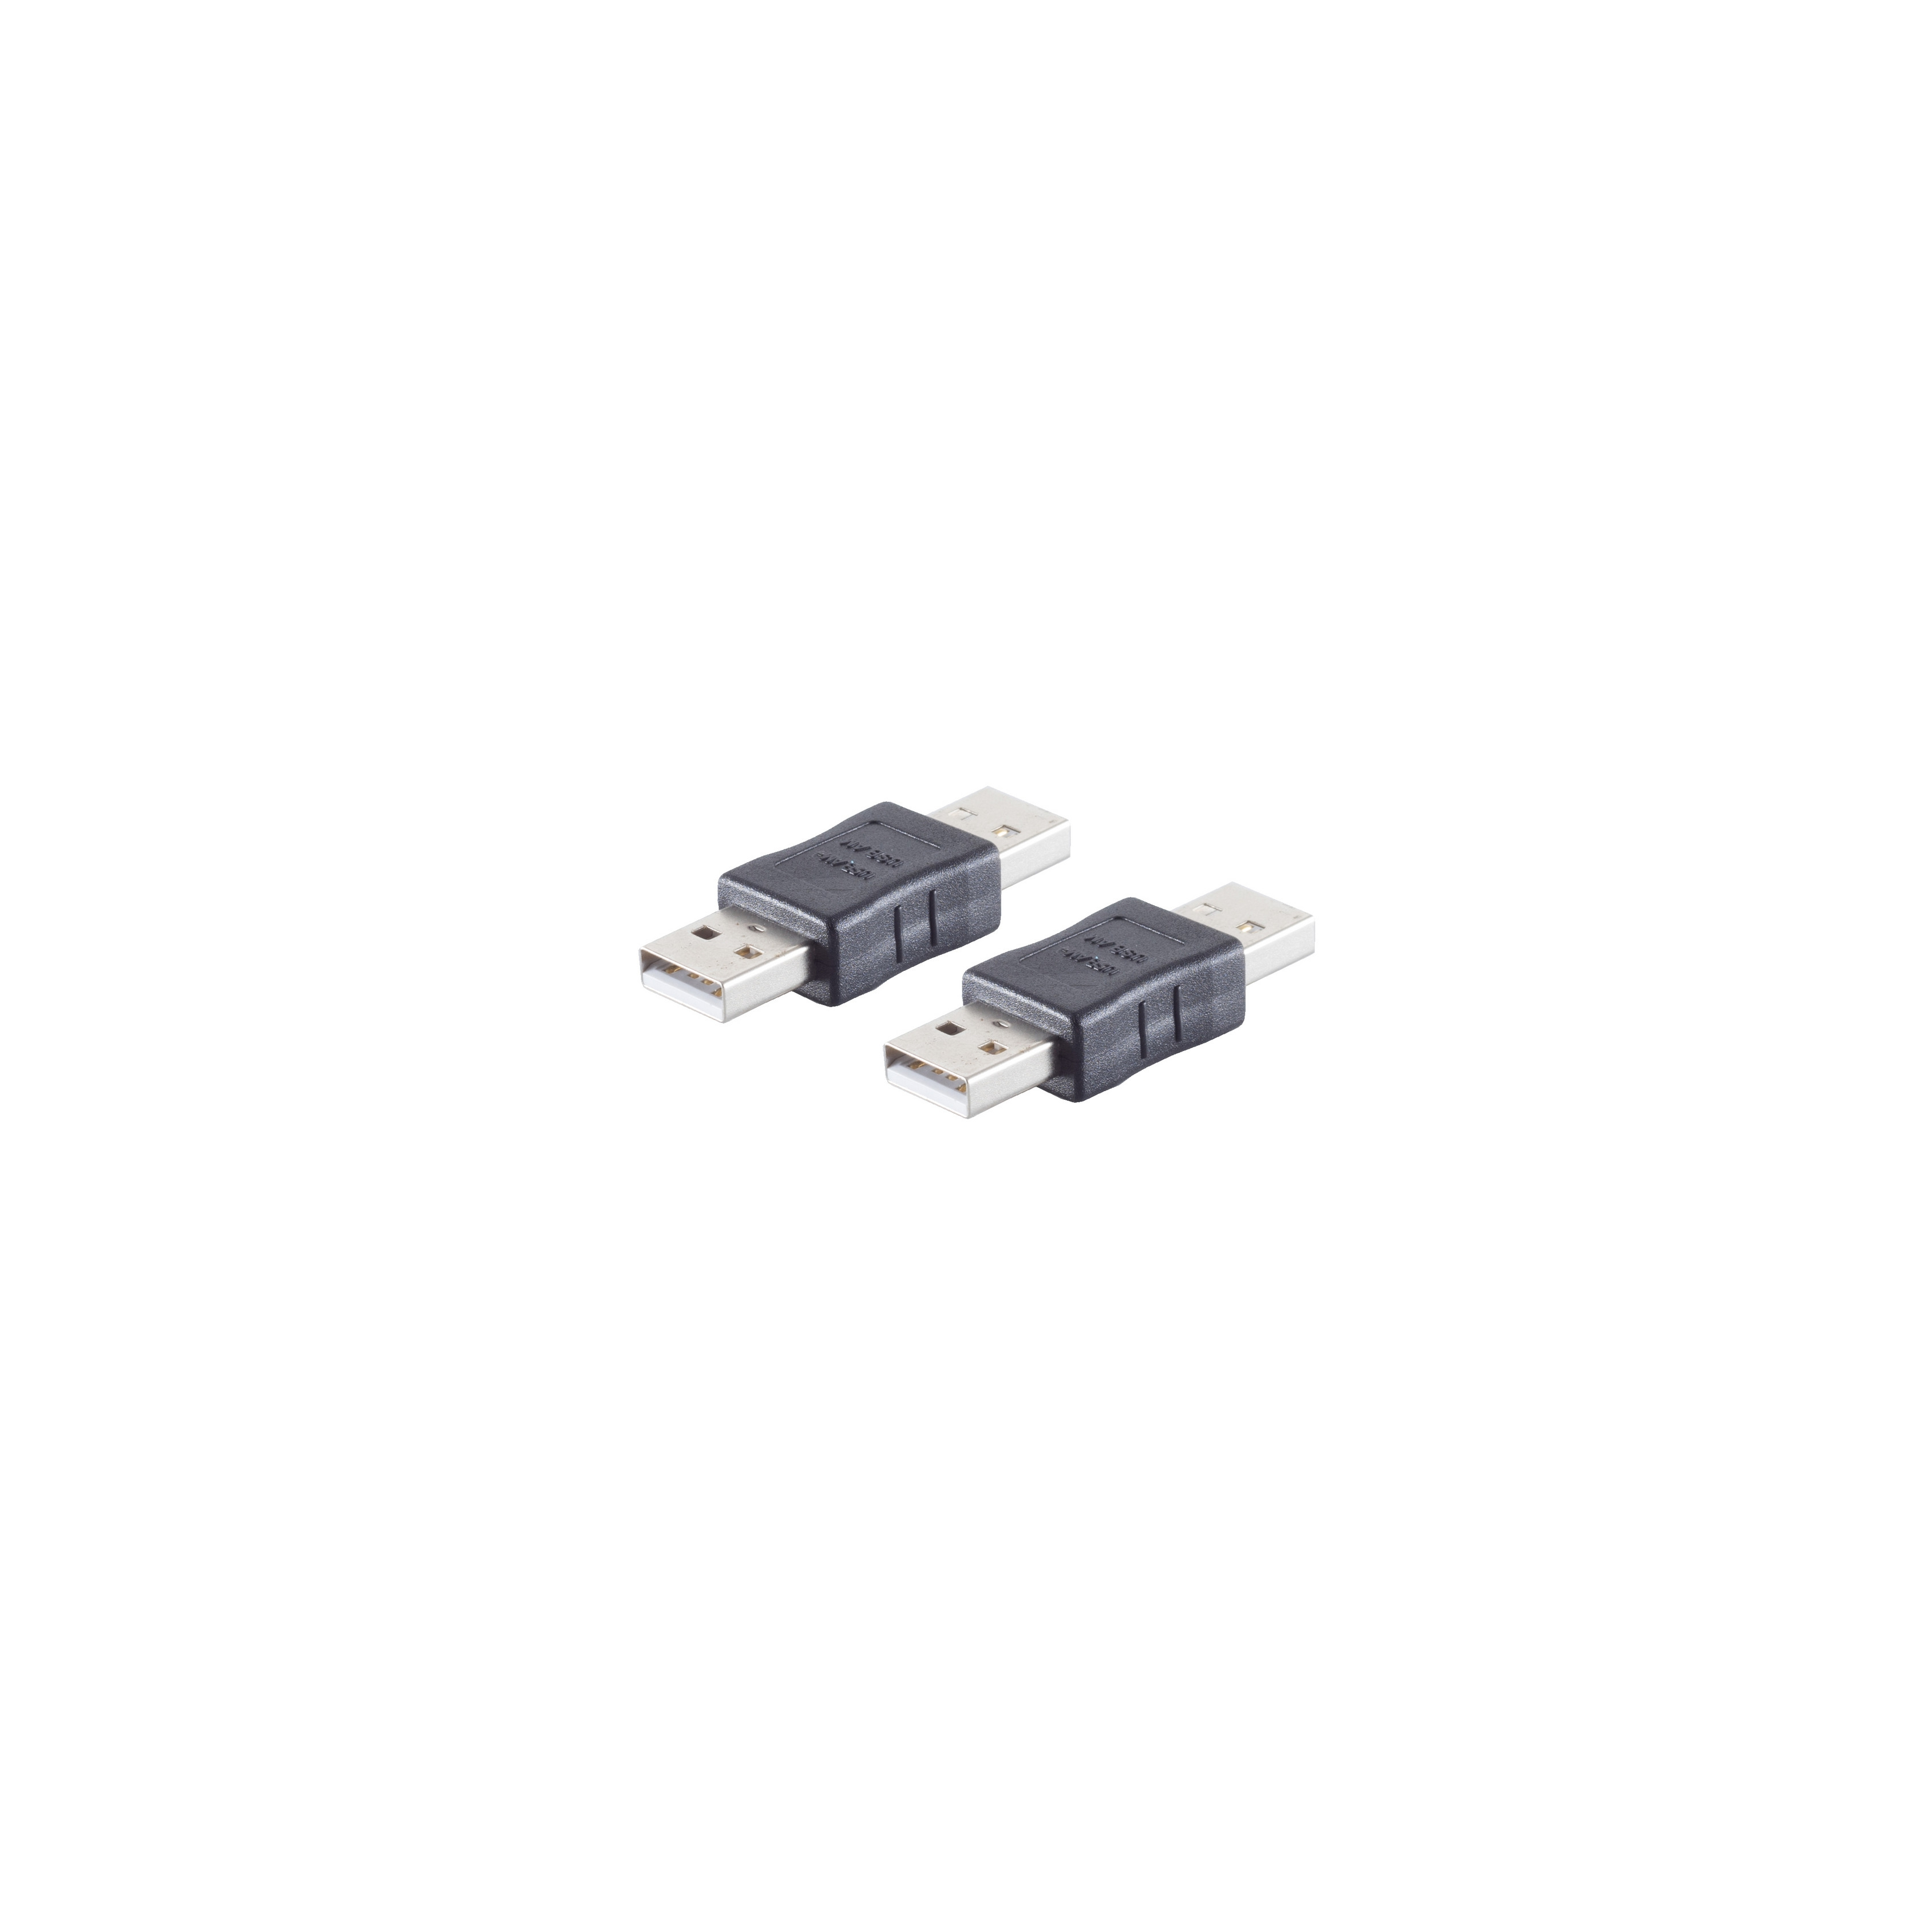 SHIVERPEAKS USB Adapter 2.0 A Stecker USB Stecker / Adapter, grau A